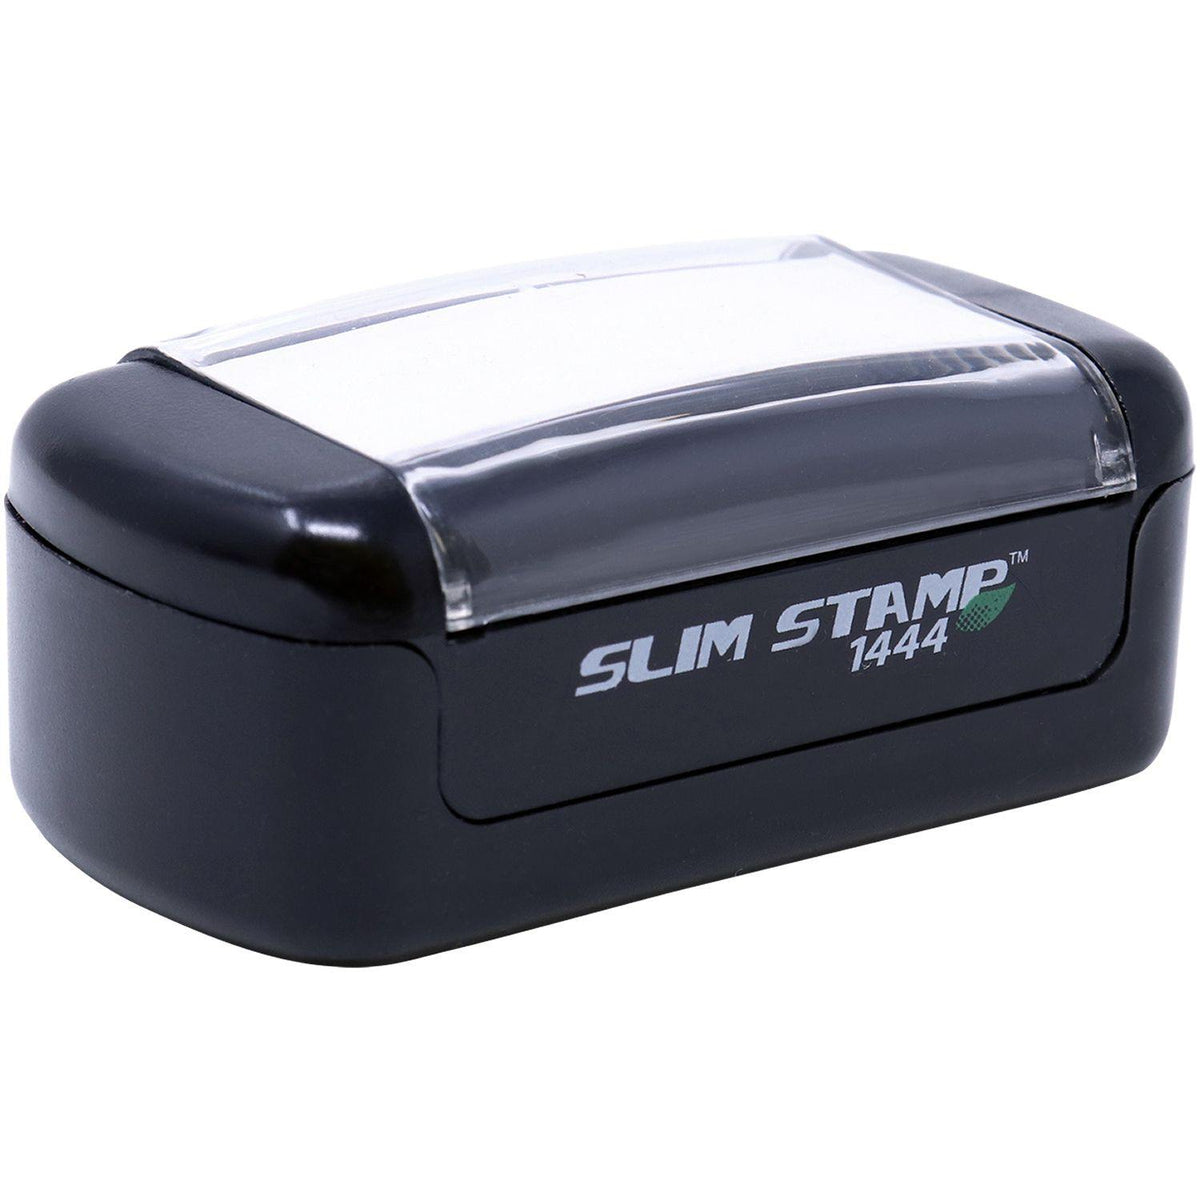 Slim Pre-Inked Certificada Stamp - Engineer Seal Stamps - Brand_Slim, Impression Size_Small, Stamp Type_Pre-Inked Stamp, Type of Use_Office, Type of Use_Postal &amp; Mailing